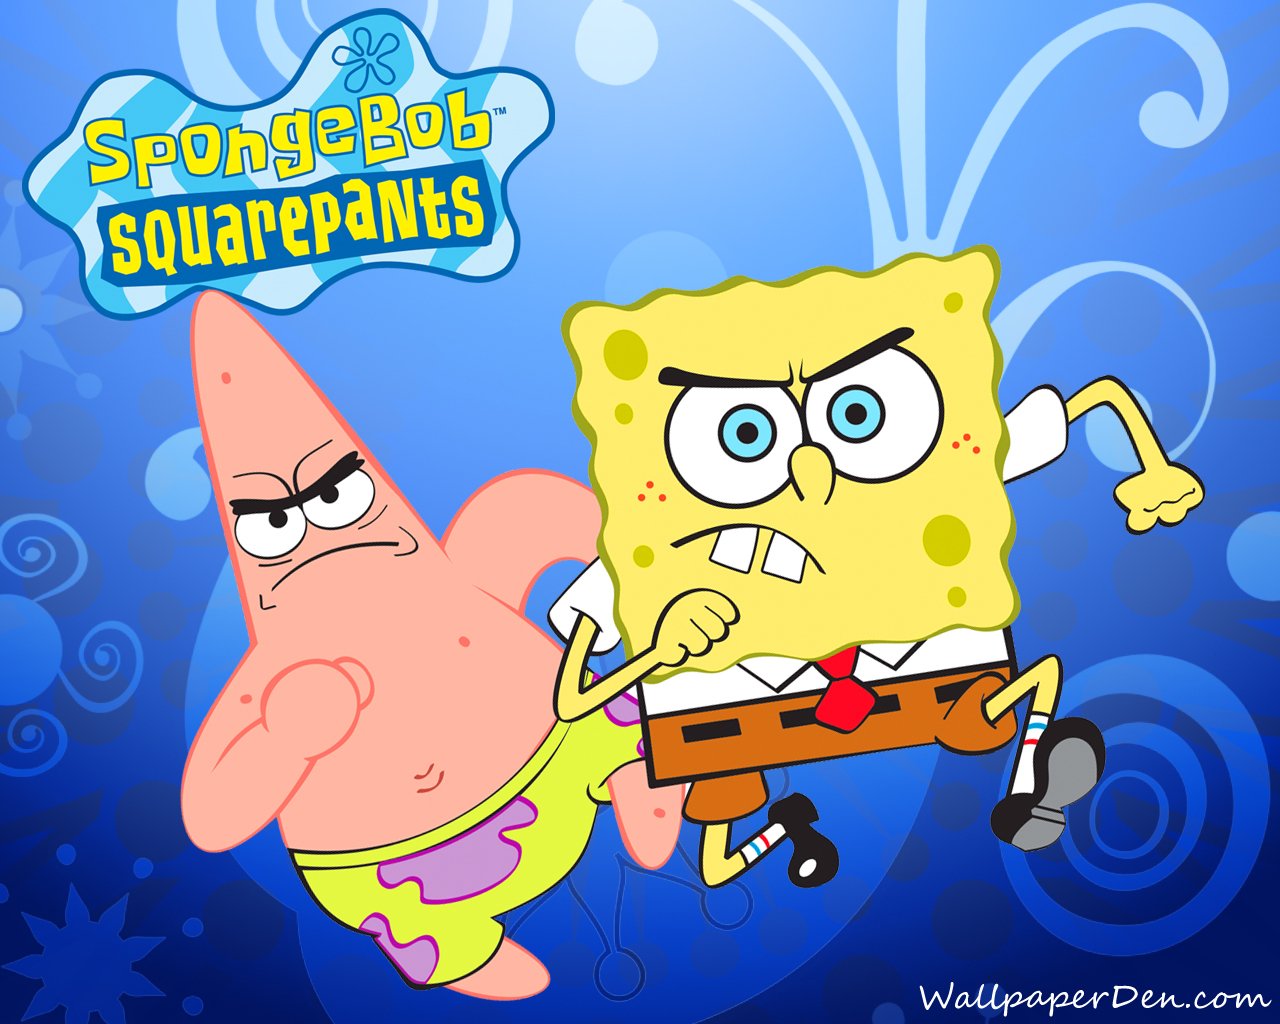 Free Download Patrick Star And Spongebob Images Spongebob And